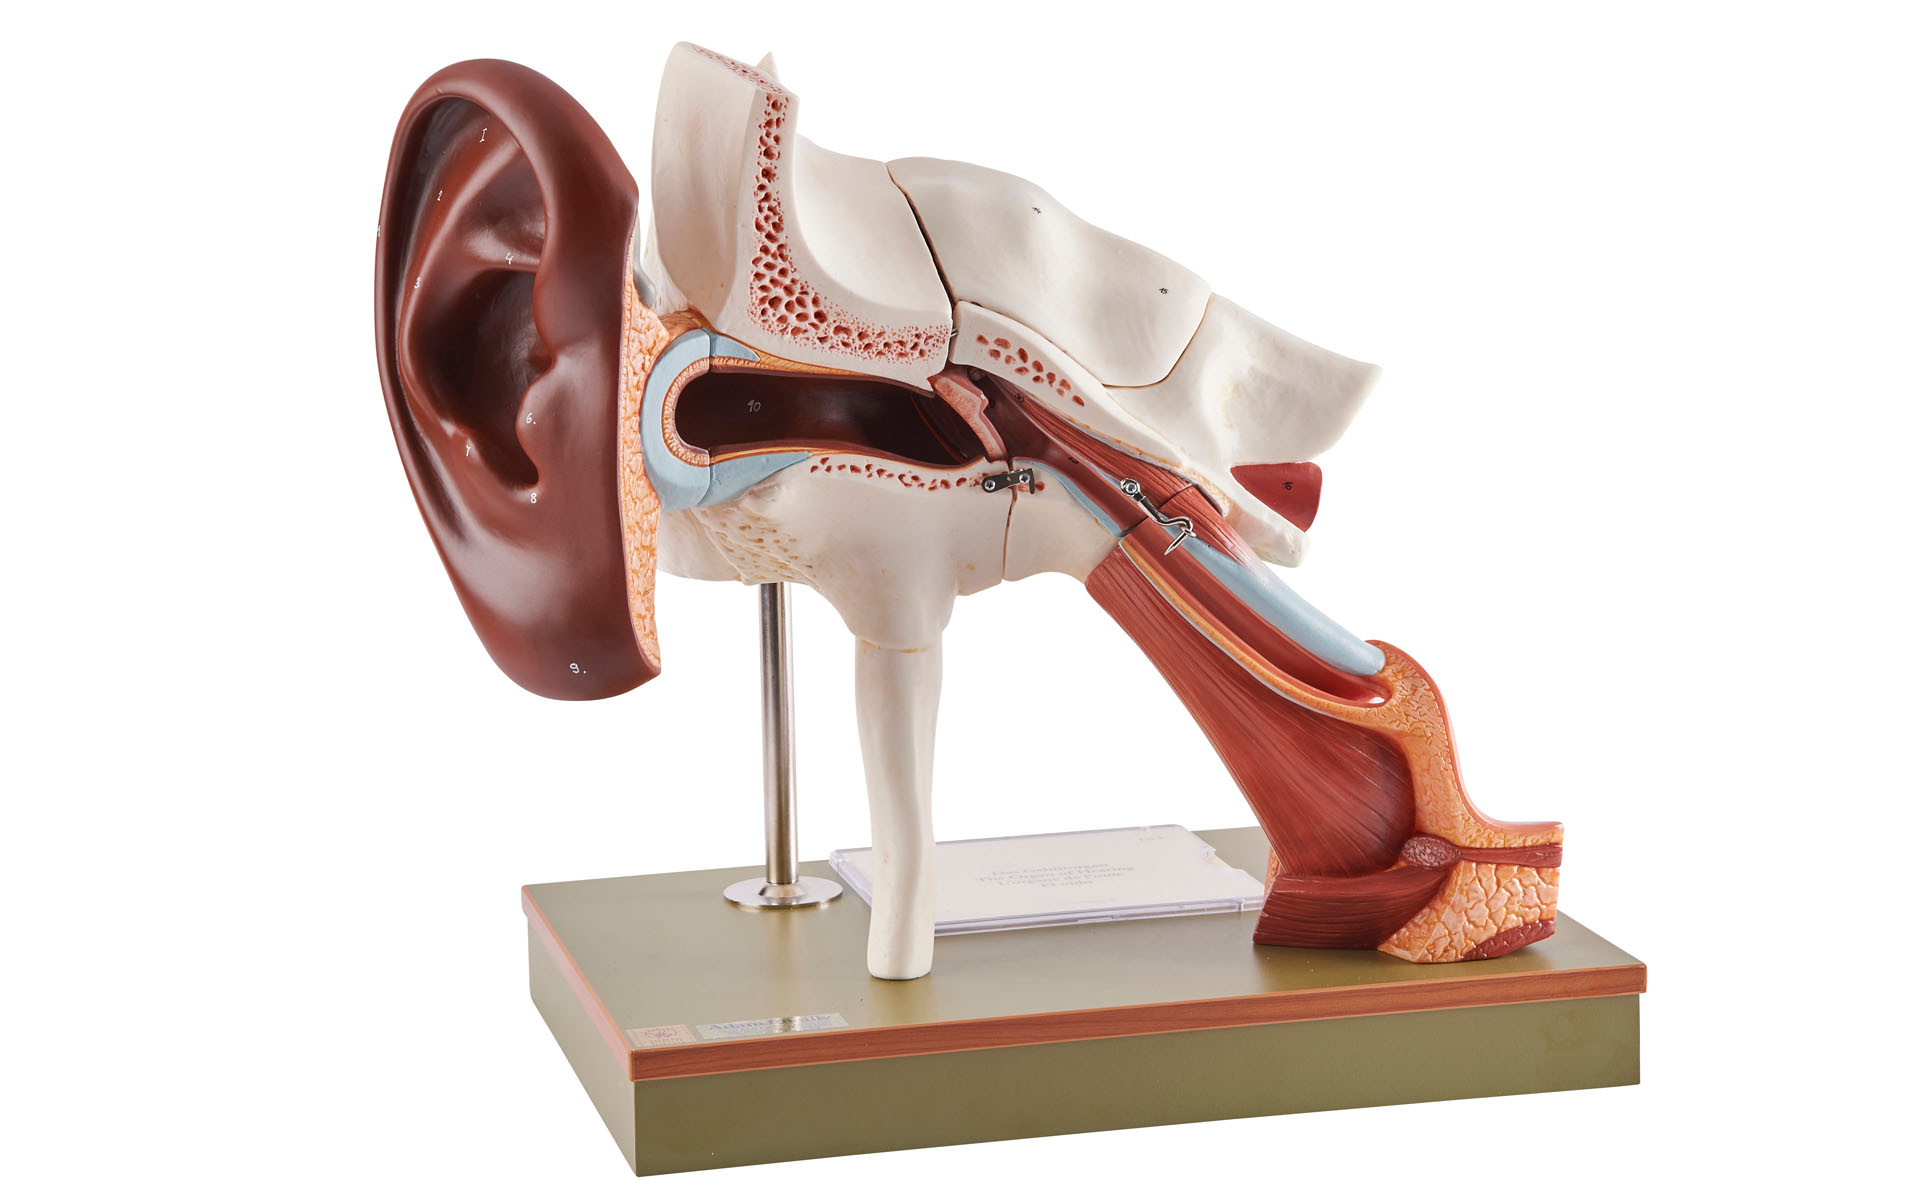 Ear With Pinna – Separates Into 8 Parts, Dark